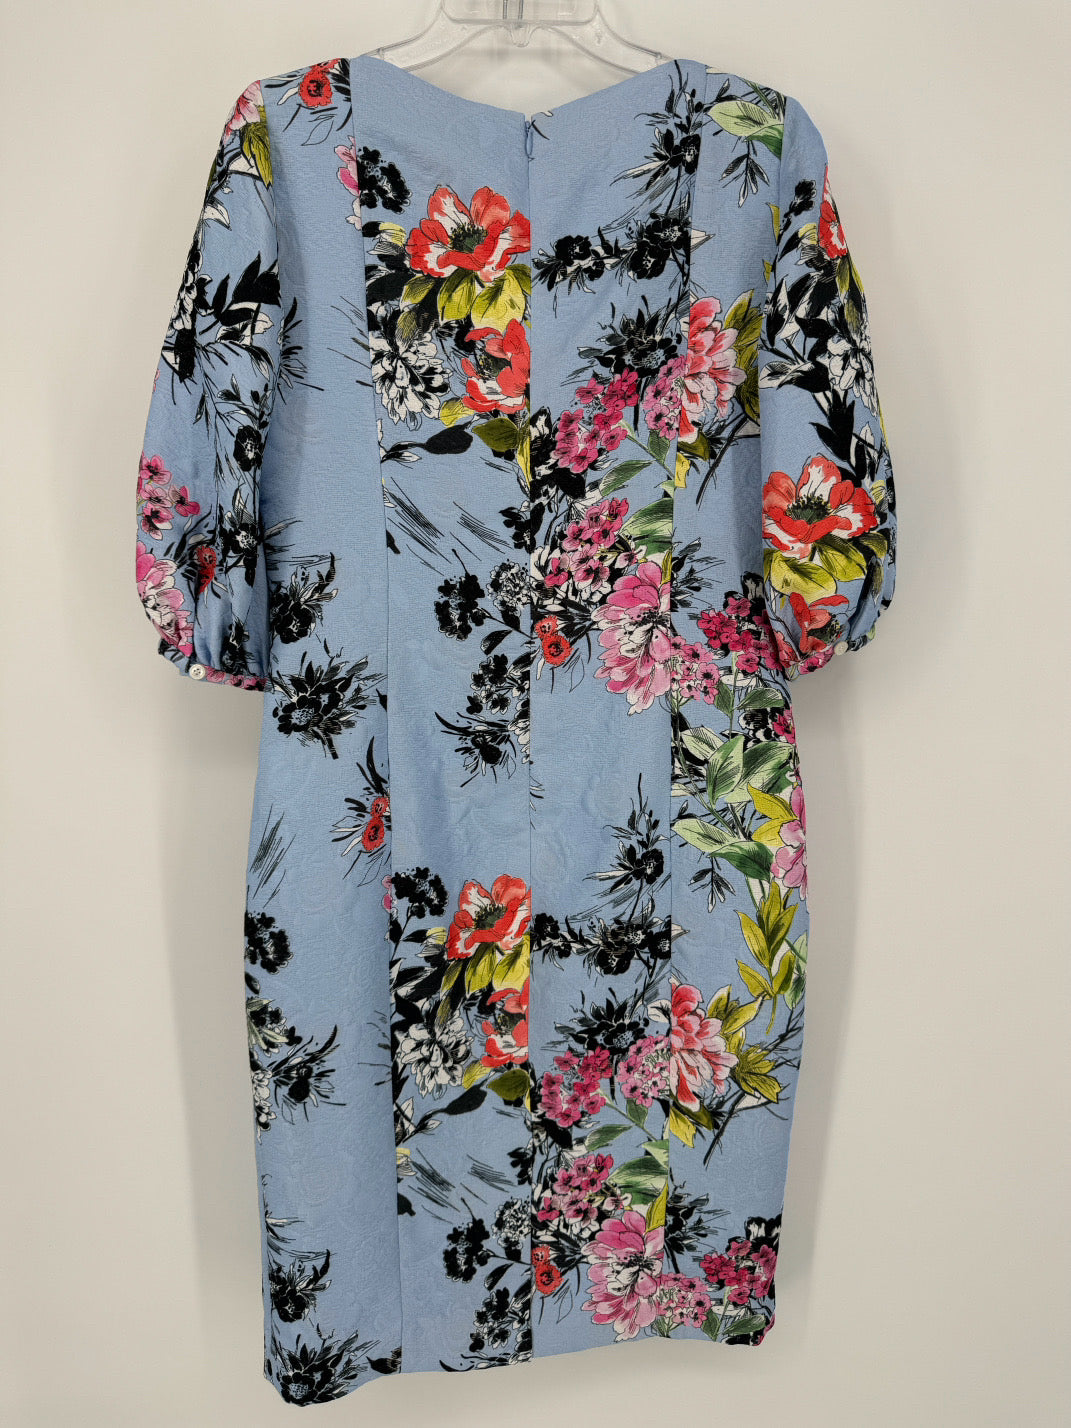 CARLISLE COLLECTION Size 10 Powder Blue Mariposa Floral Dress NWT